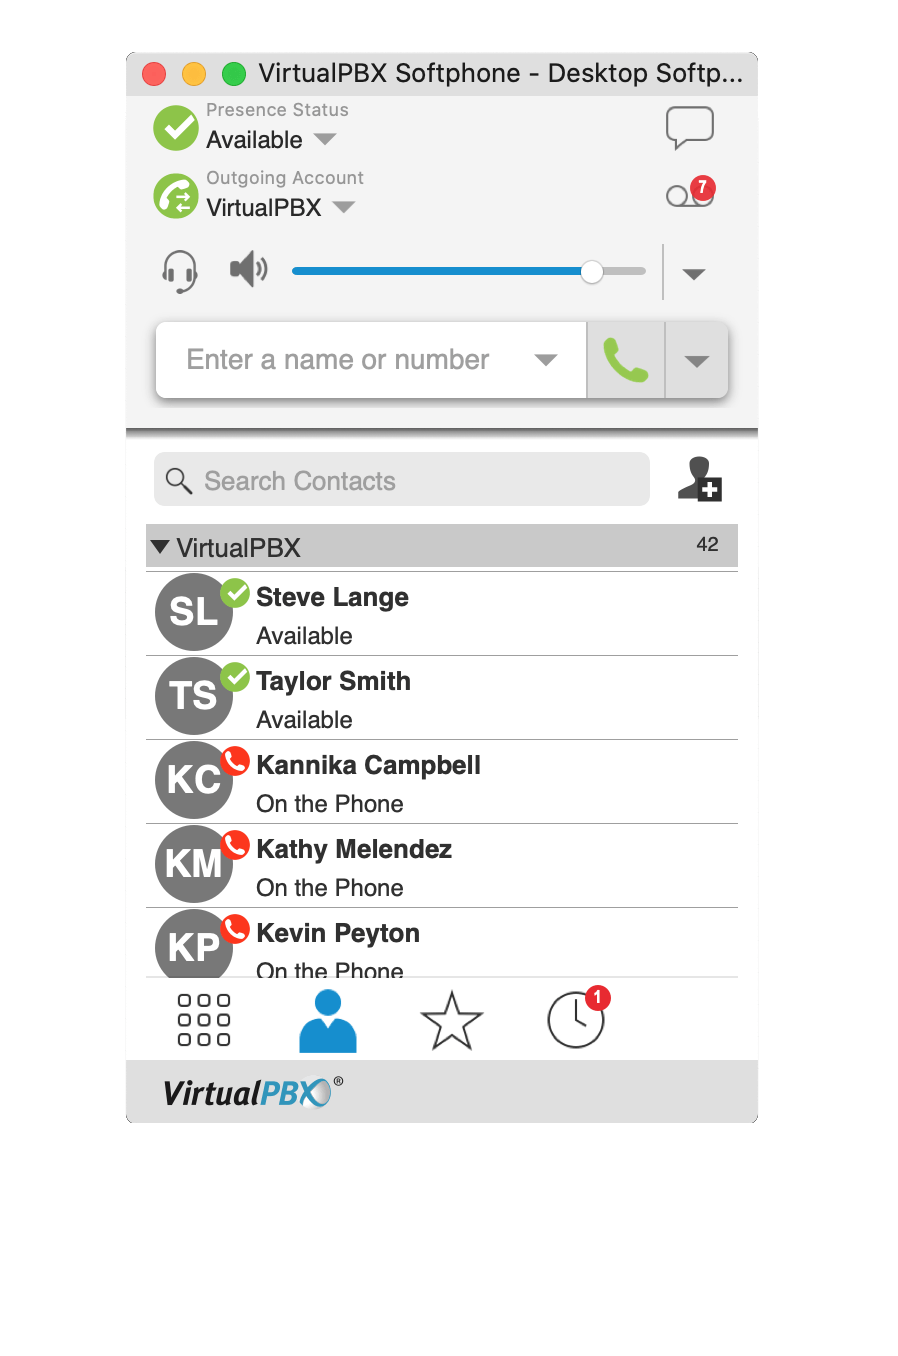 VirtualPBX Desktop Softphone - Upload Your Contact List